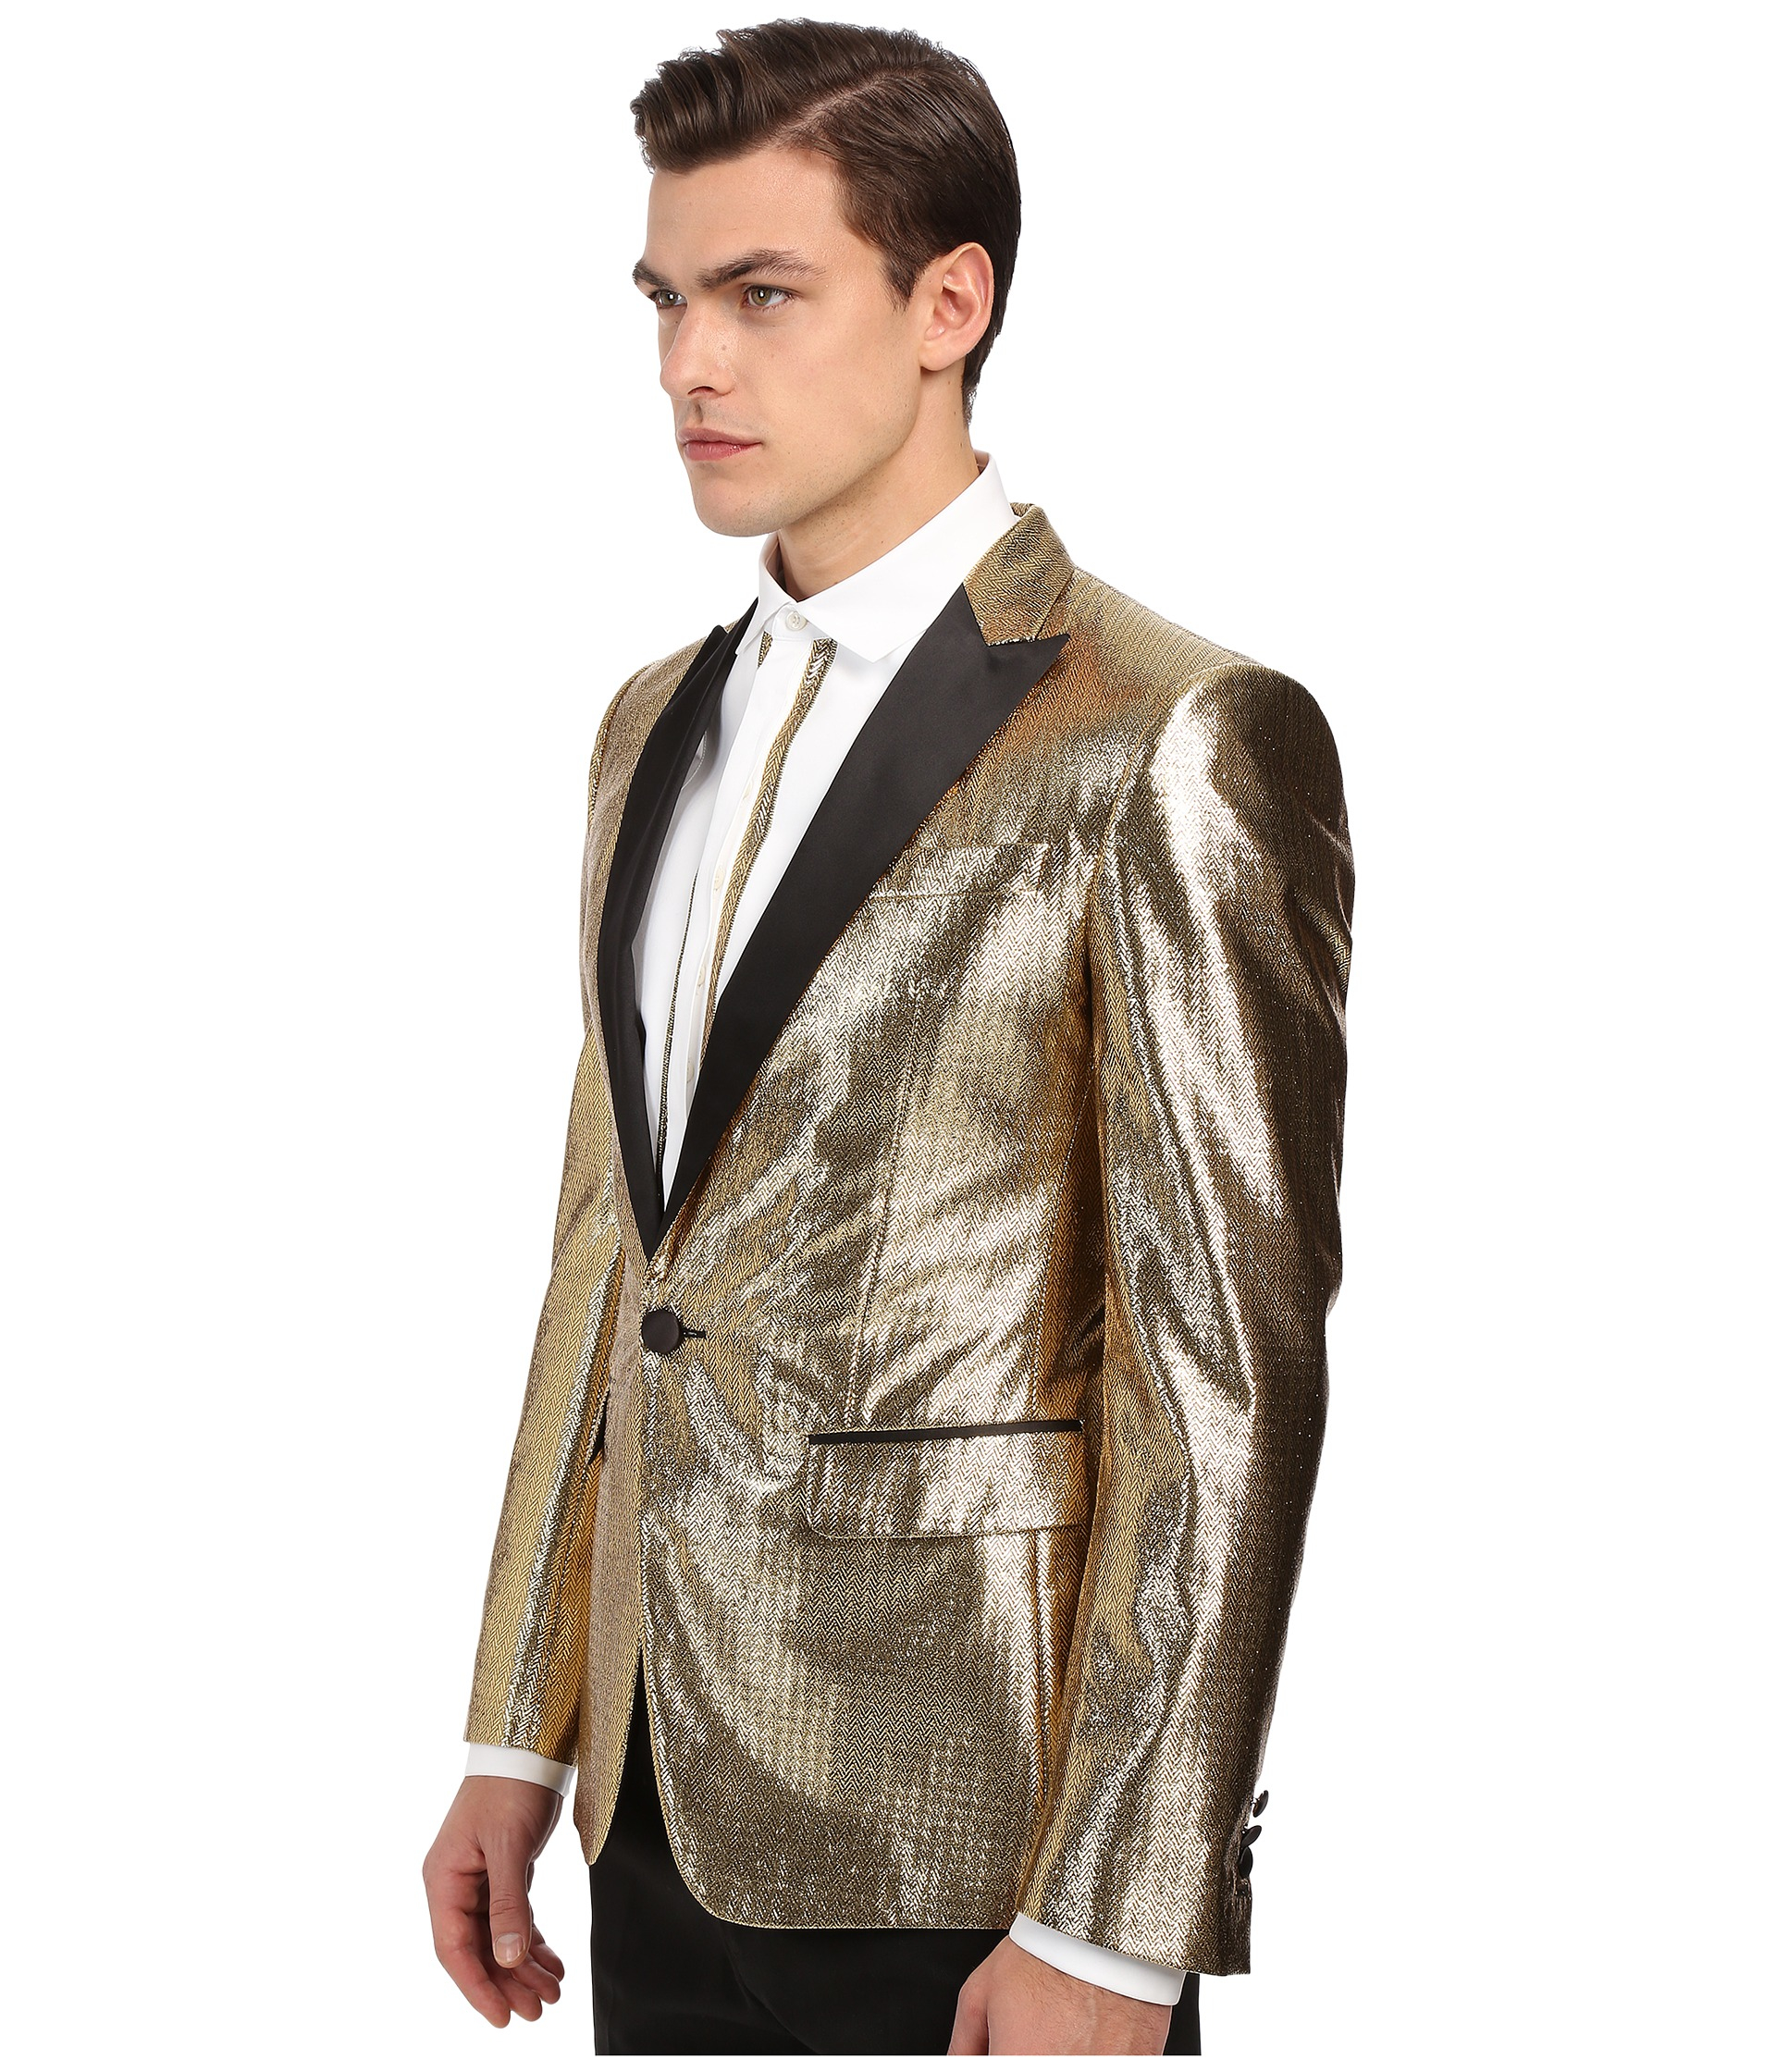 dsquared gold jacket